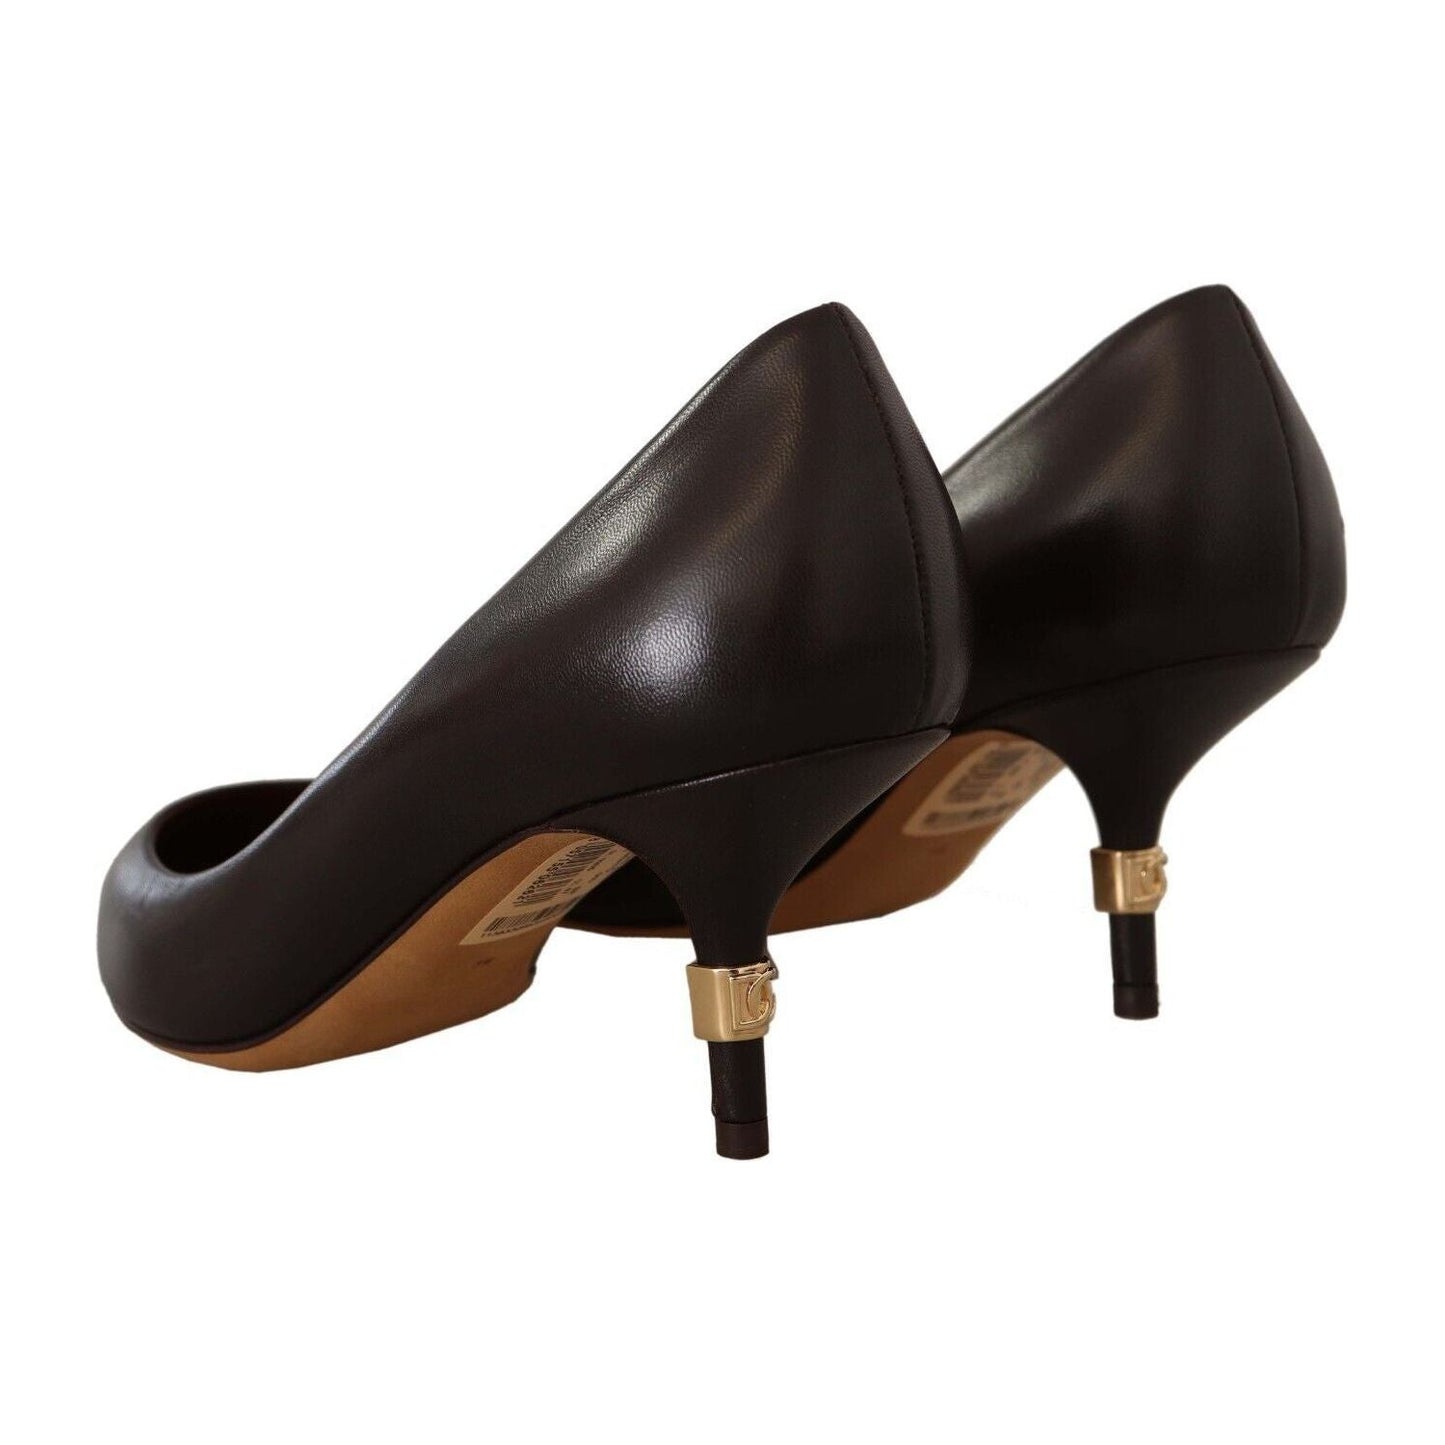 Dolce & Gabbana Elegant Brown Leather Heels Pumps brown-leather-kitten-mid-heels-pumps-shoes s-l1600-8-27-7a3b5611-bfa.jpg